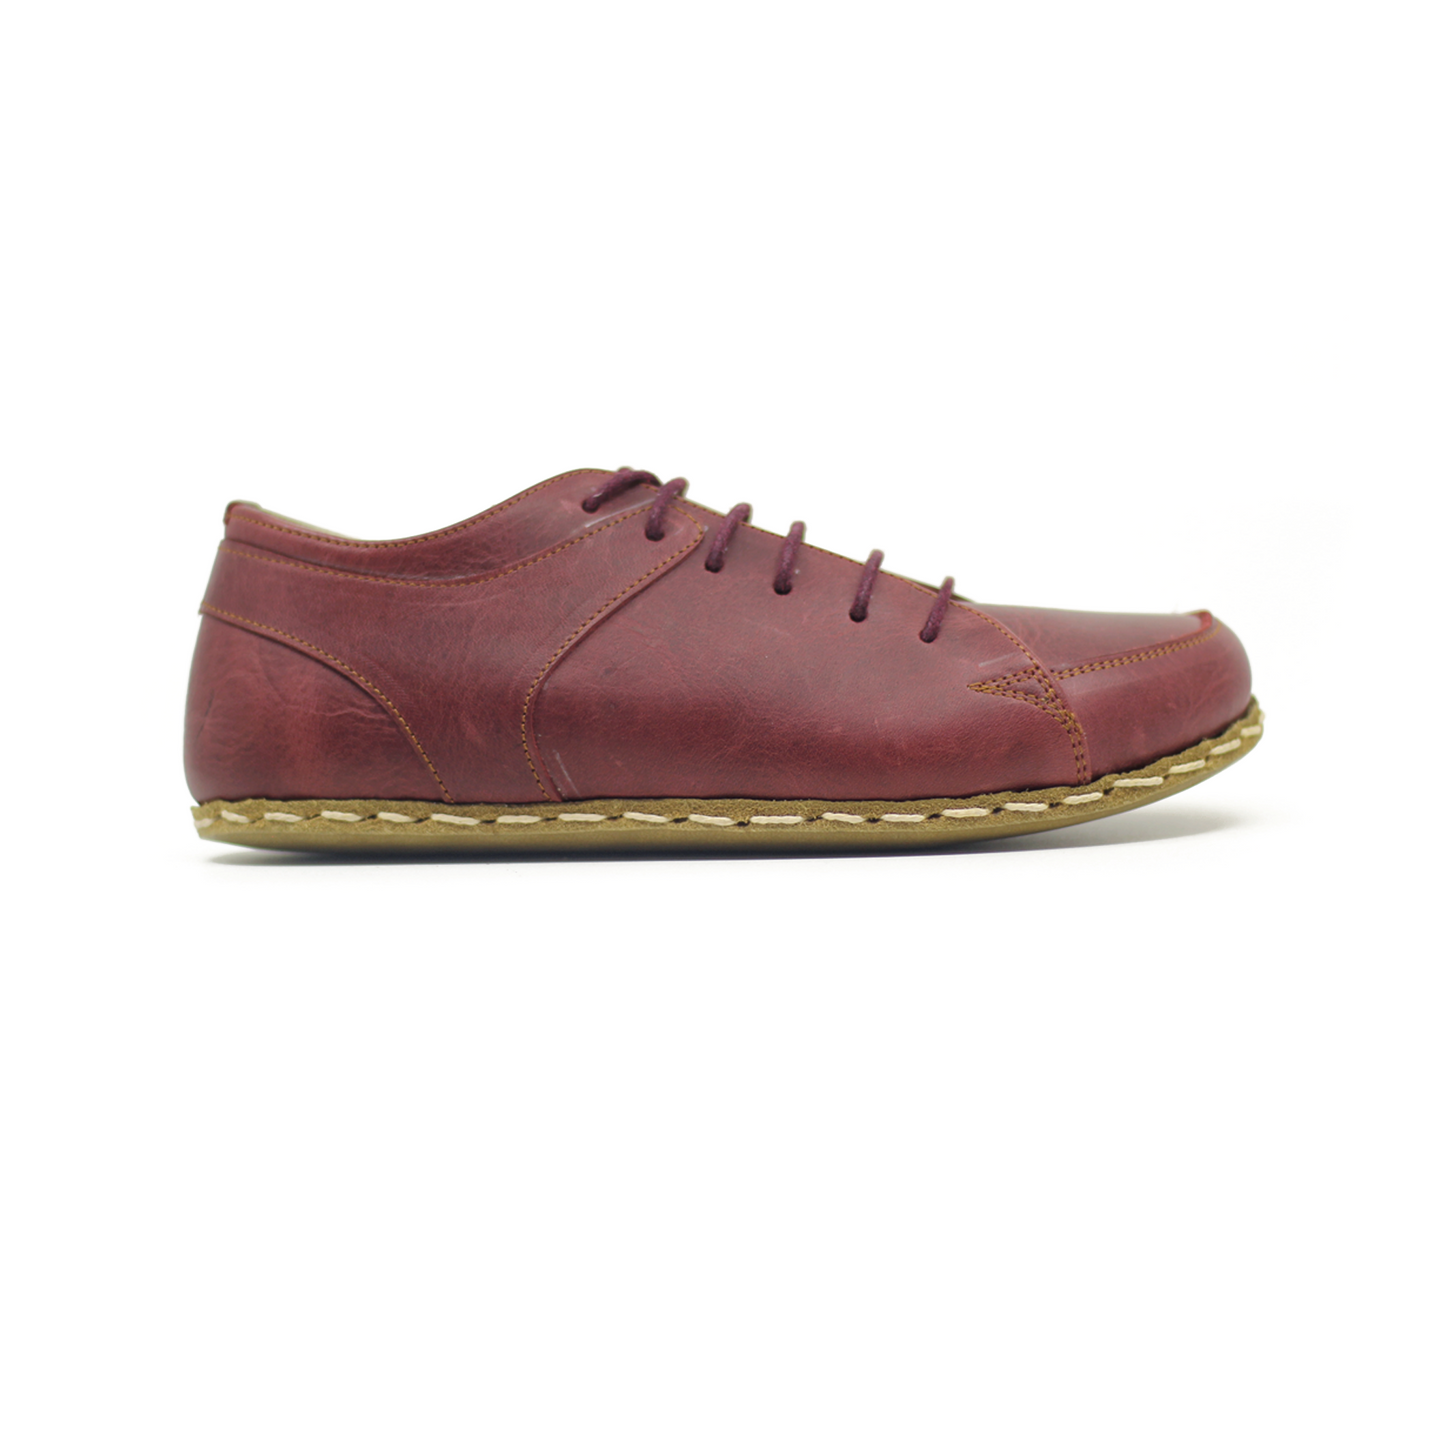 Men's Earthing Leather Sneaker: Barefoot Converse & Copper Rivet